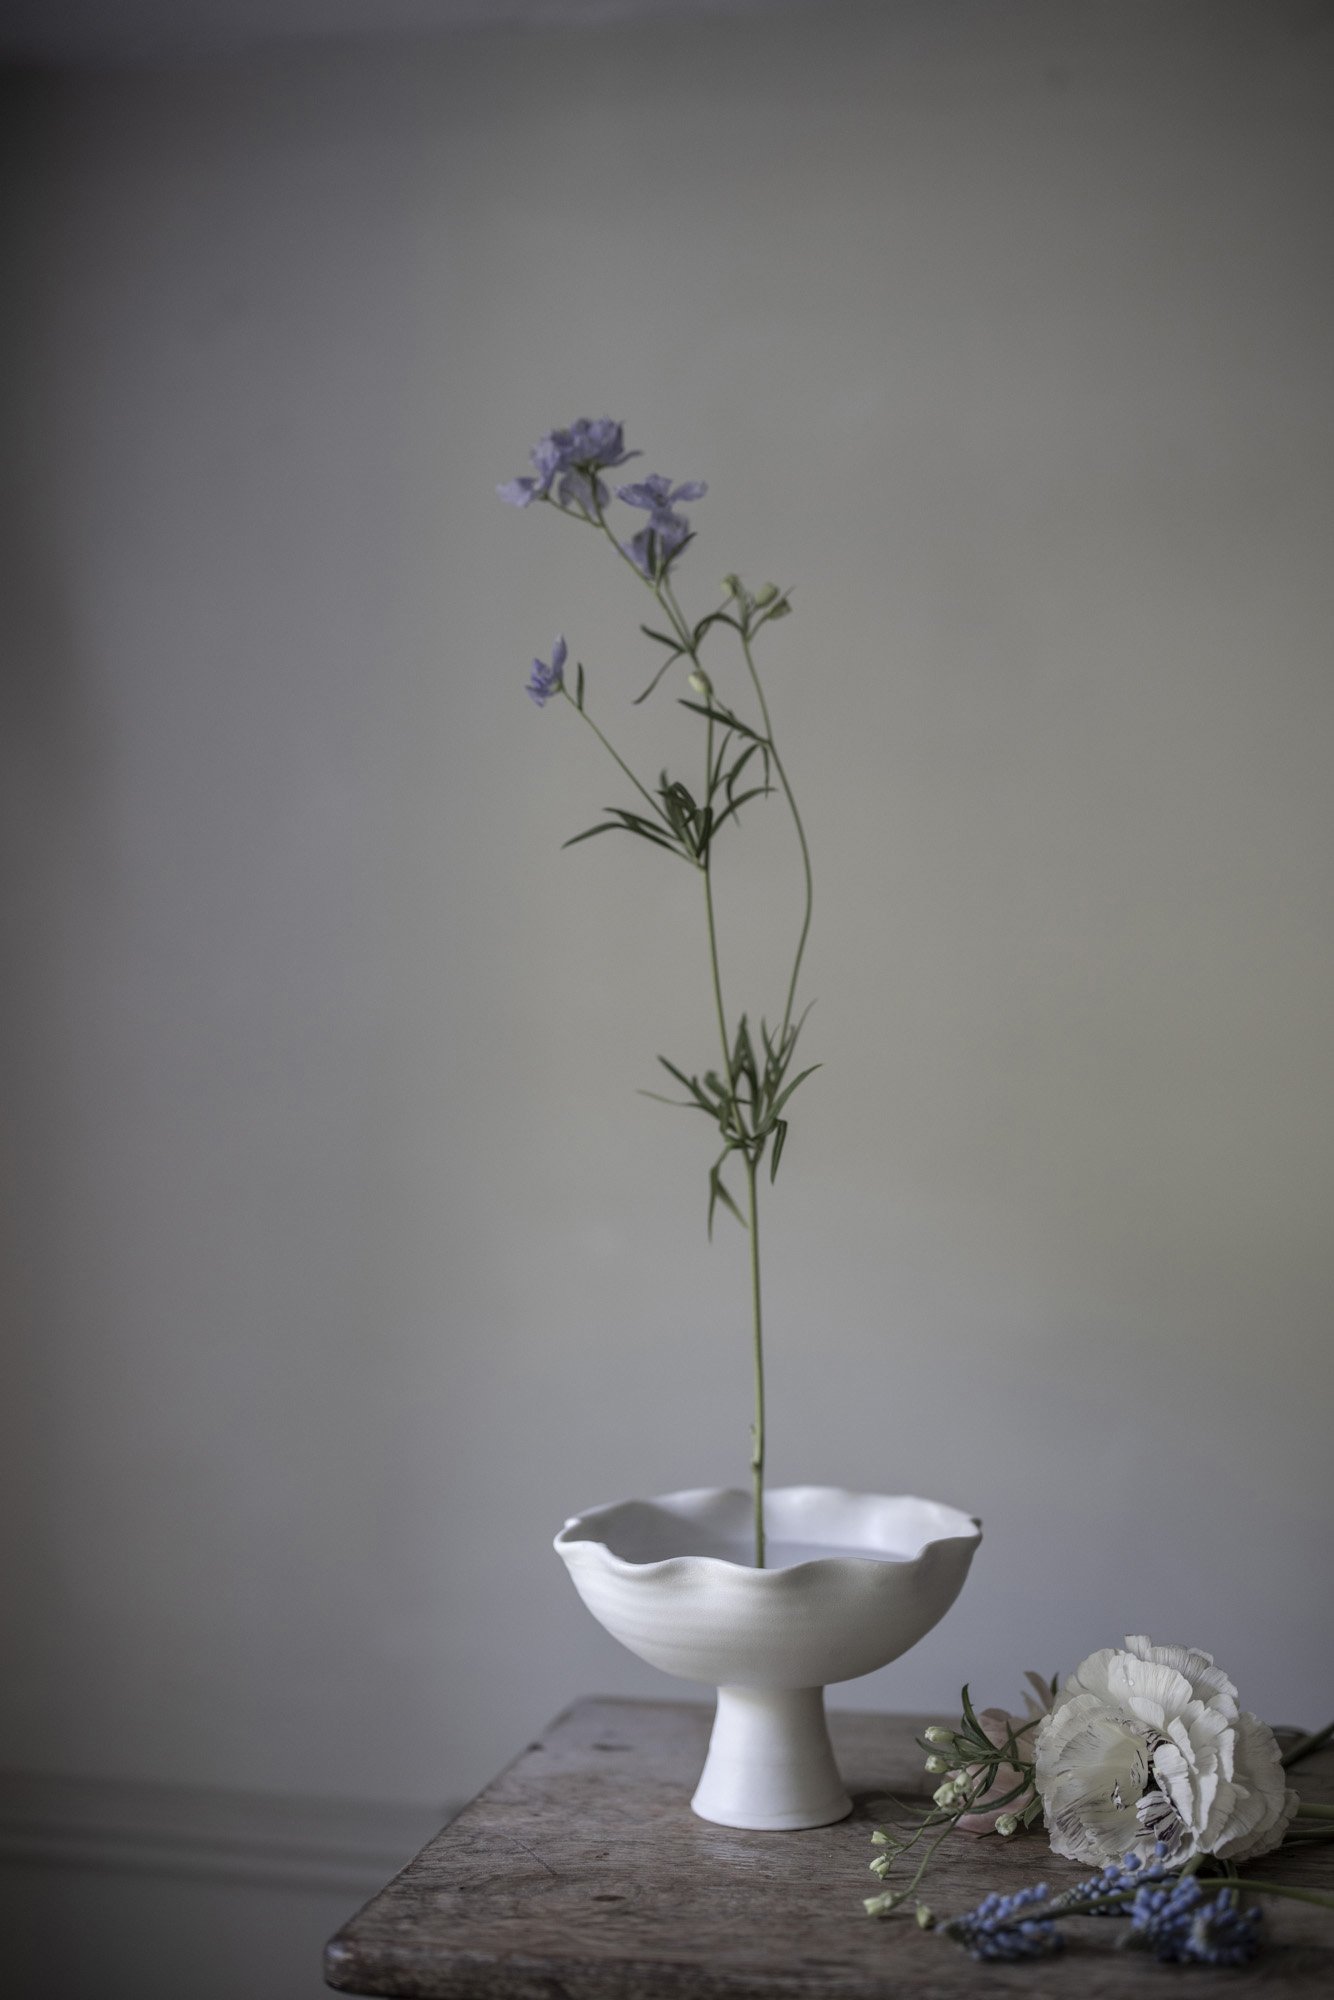 Paper-thin-moon-flower-frog-bowl-3.jpg